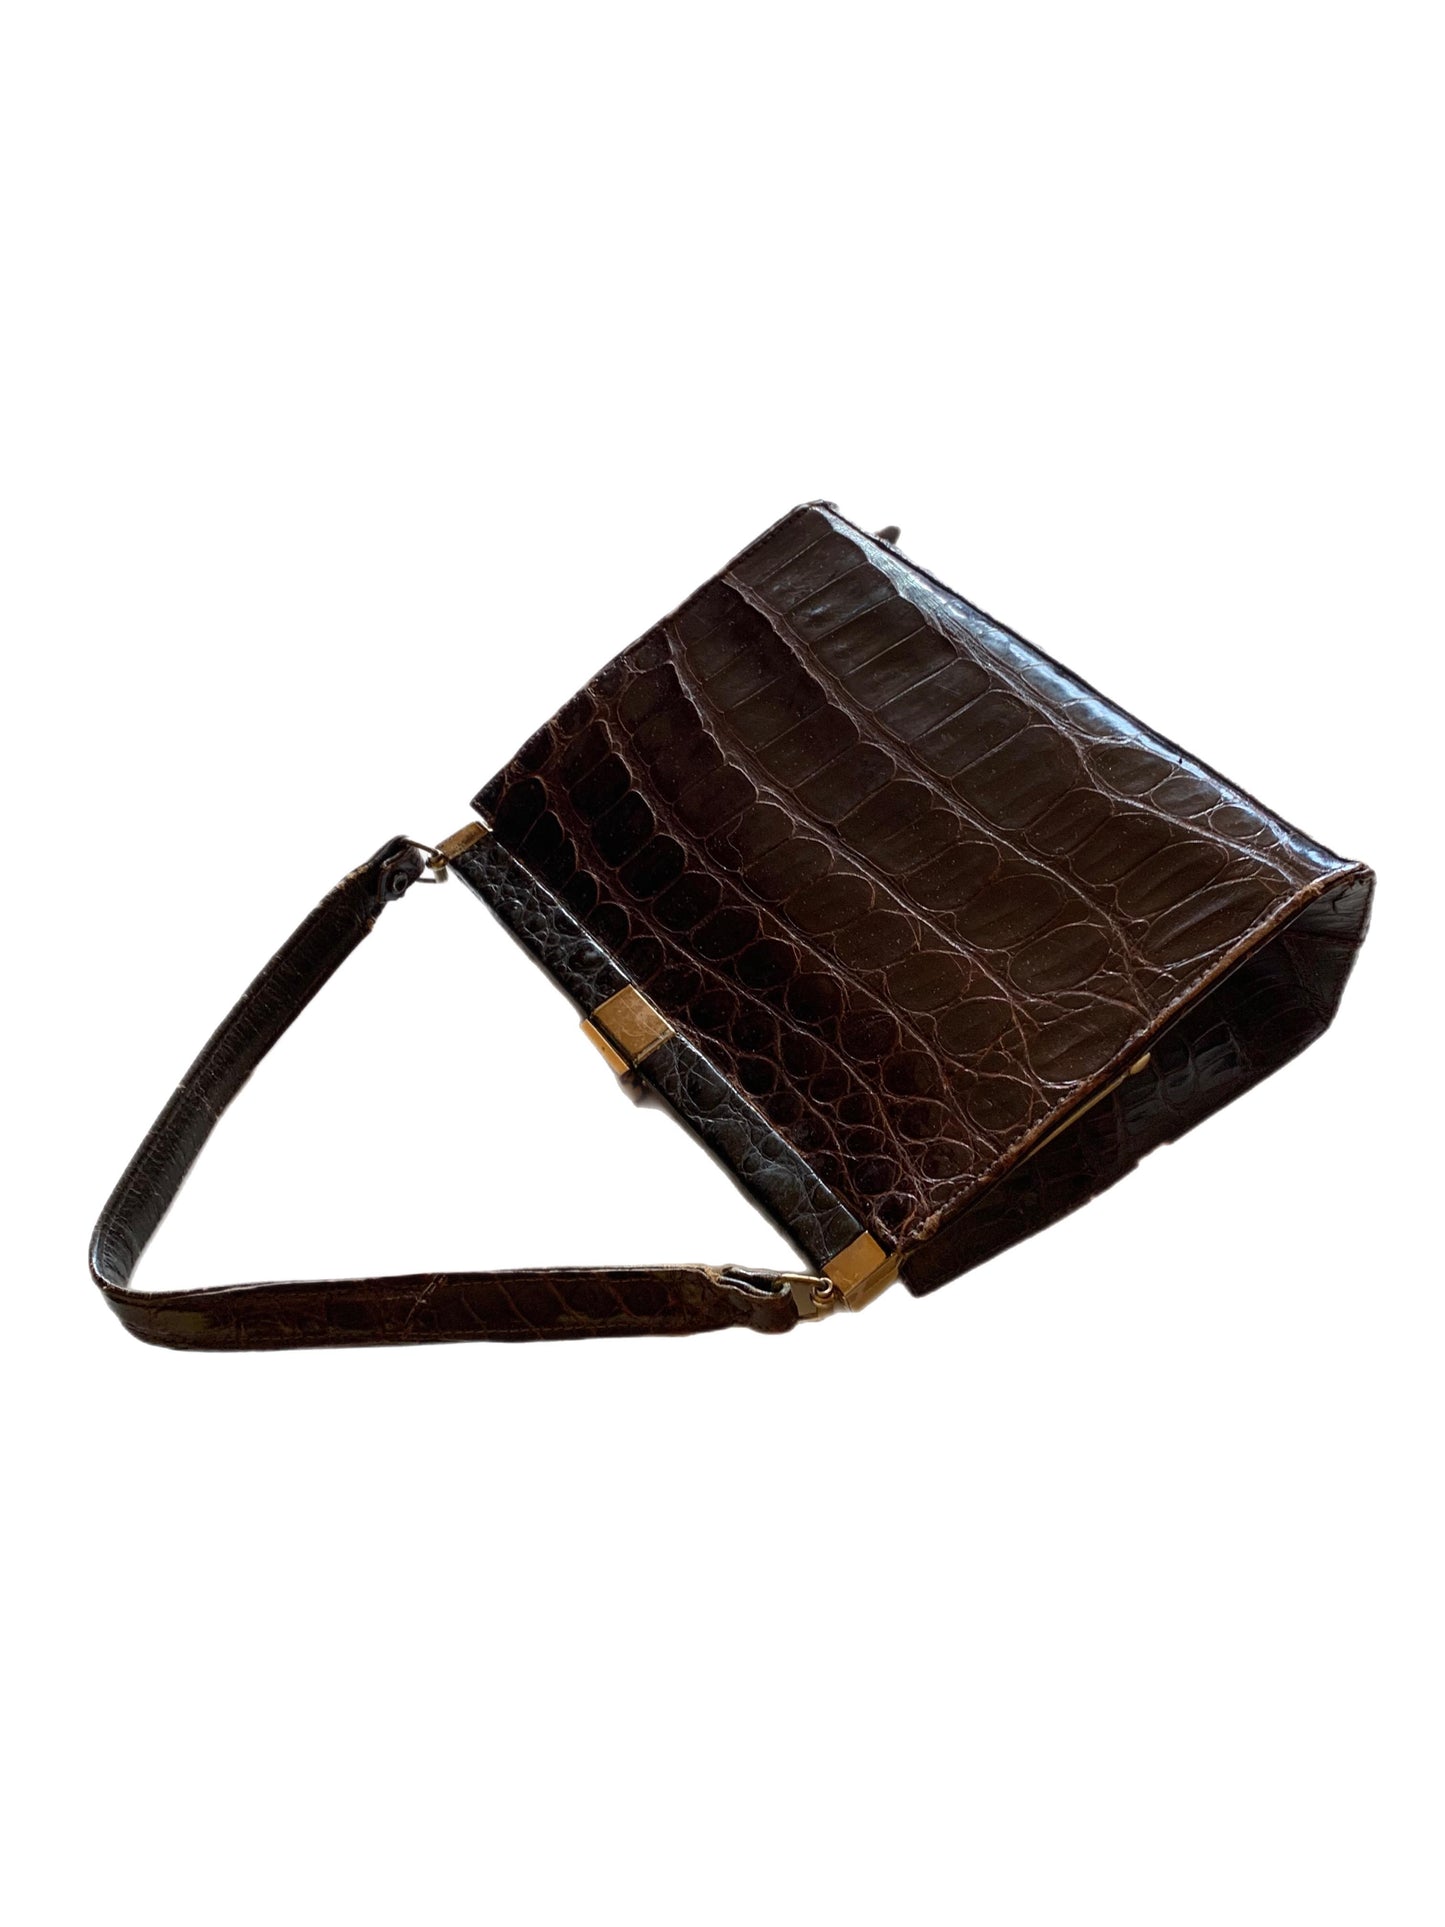 Deep Brown Alligator Skin Handbag circa 1940s